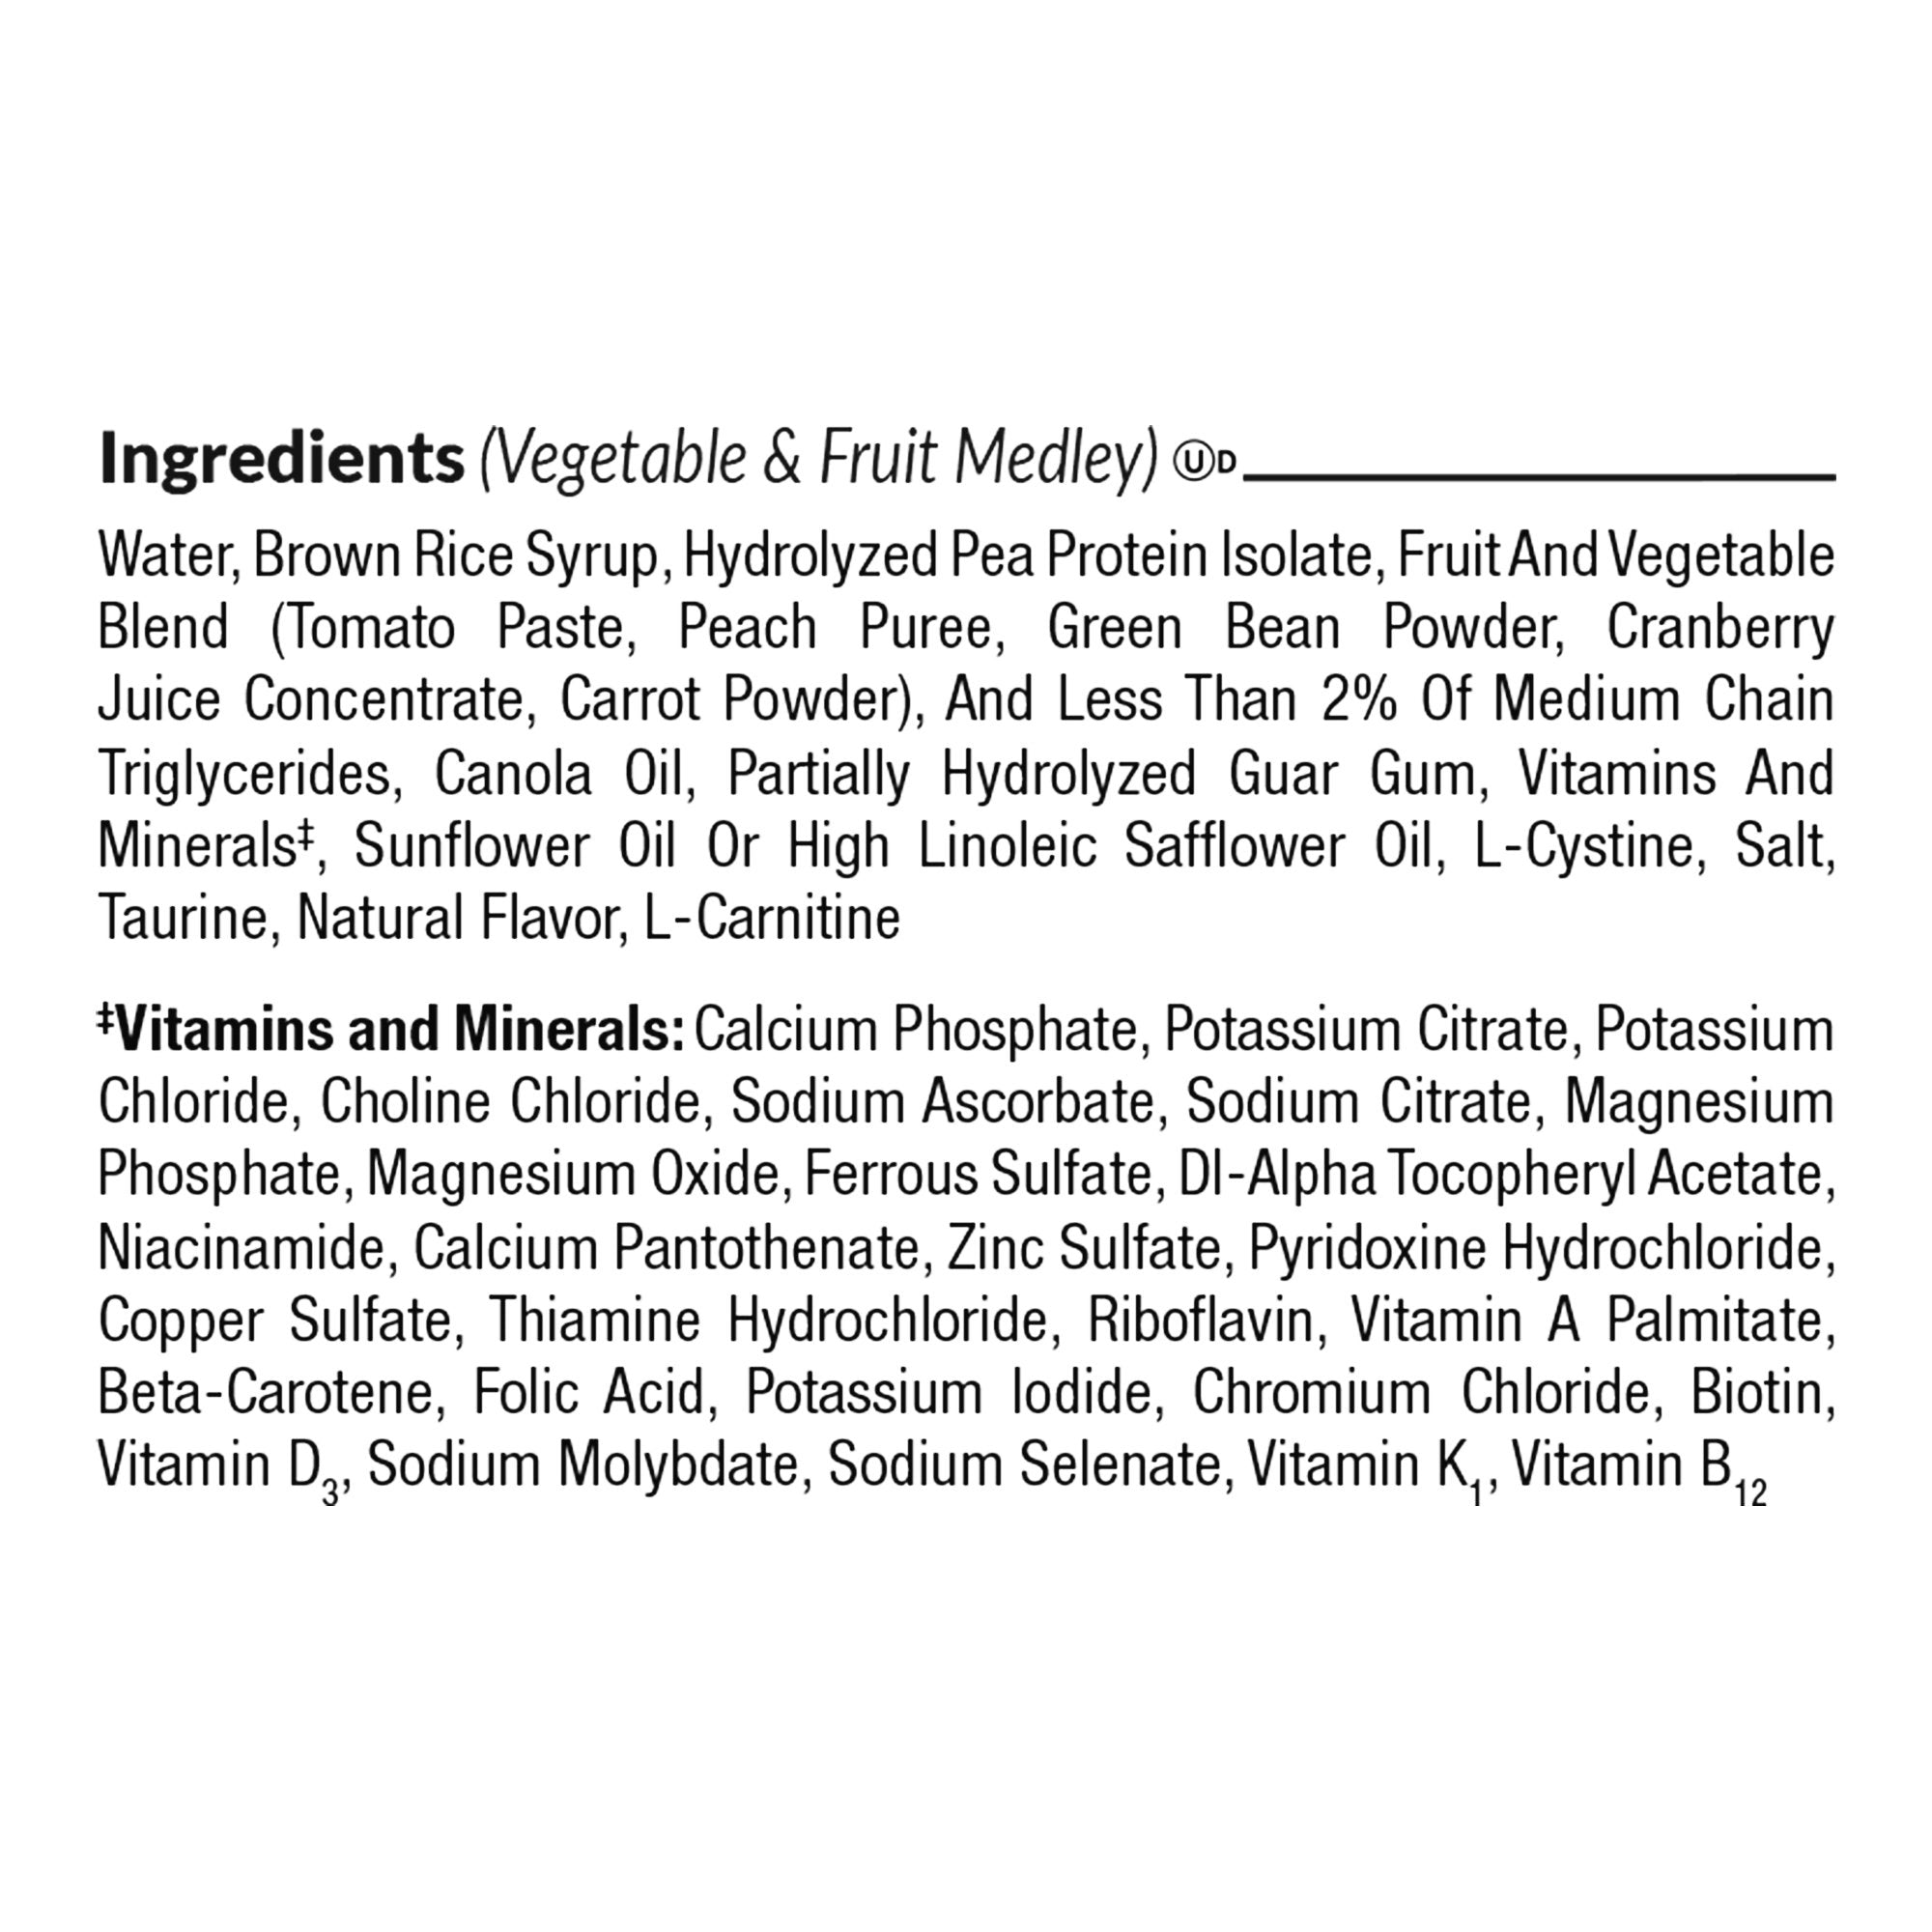 Compleat® Pediatric Nutritionally Complete Peptide Plant-Based Tube Feeding Formula, 8.45-ounce carton (24 Units)